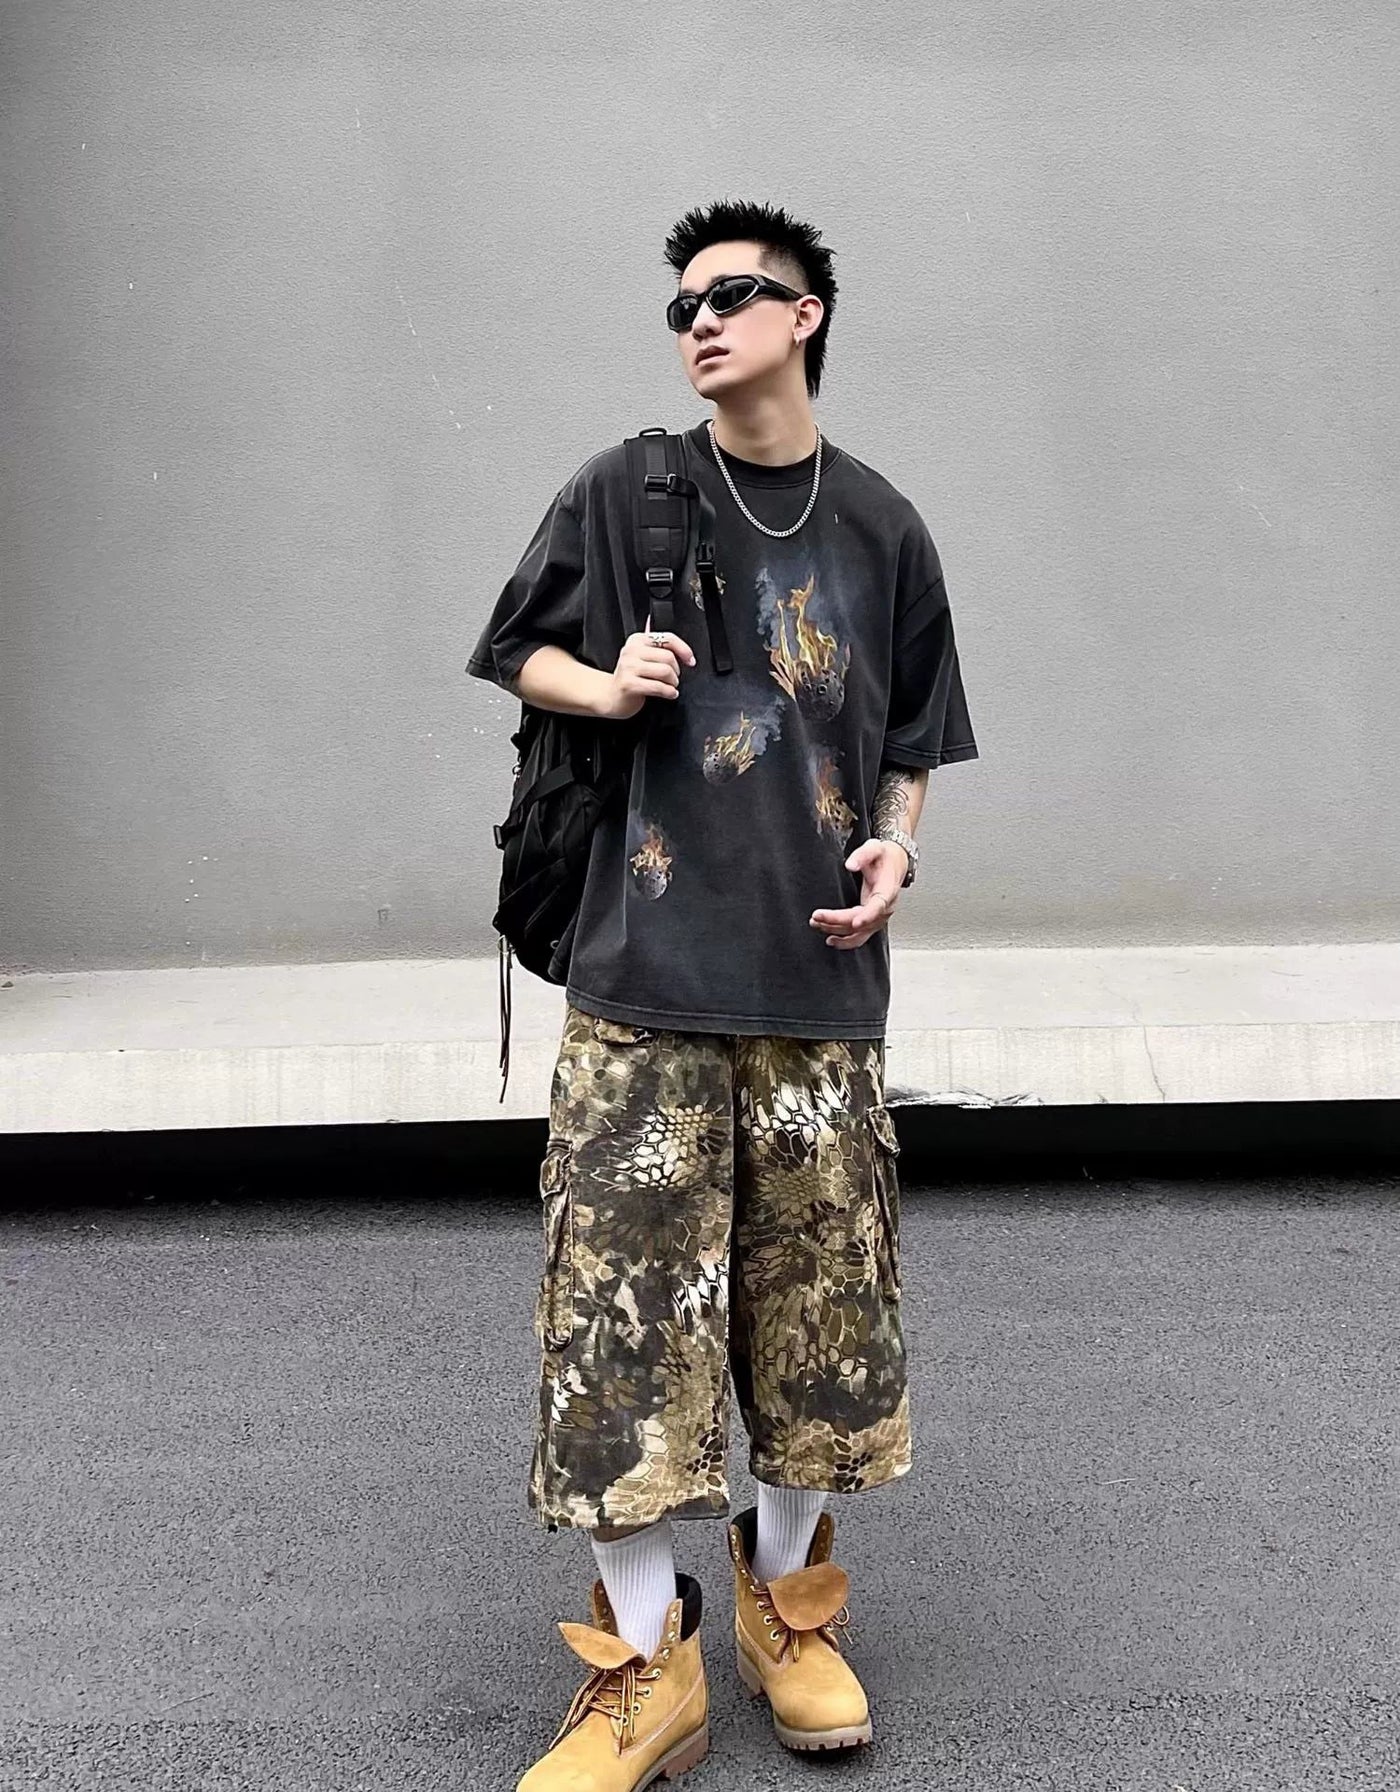 Multi-Pocket Snake Pattern Cargo Shorts Korean Street Fashion Shorts By Blacklists Shop Online at OH Vault